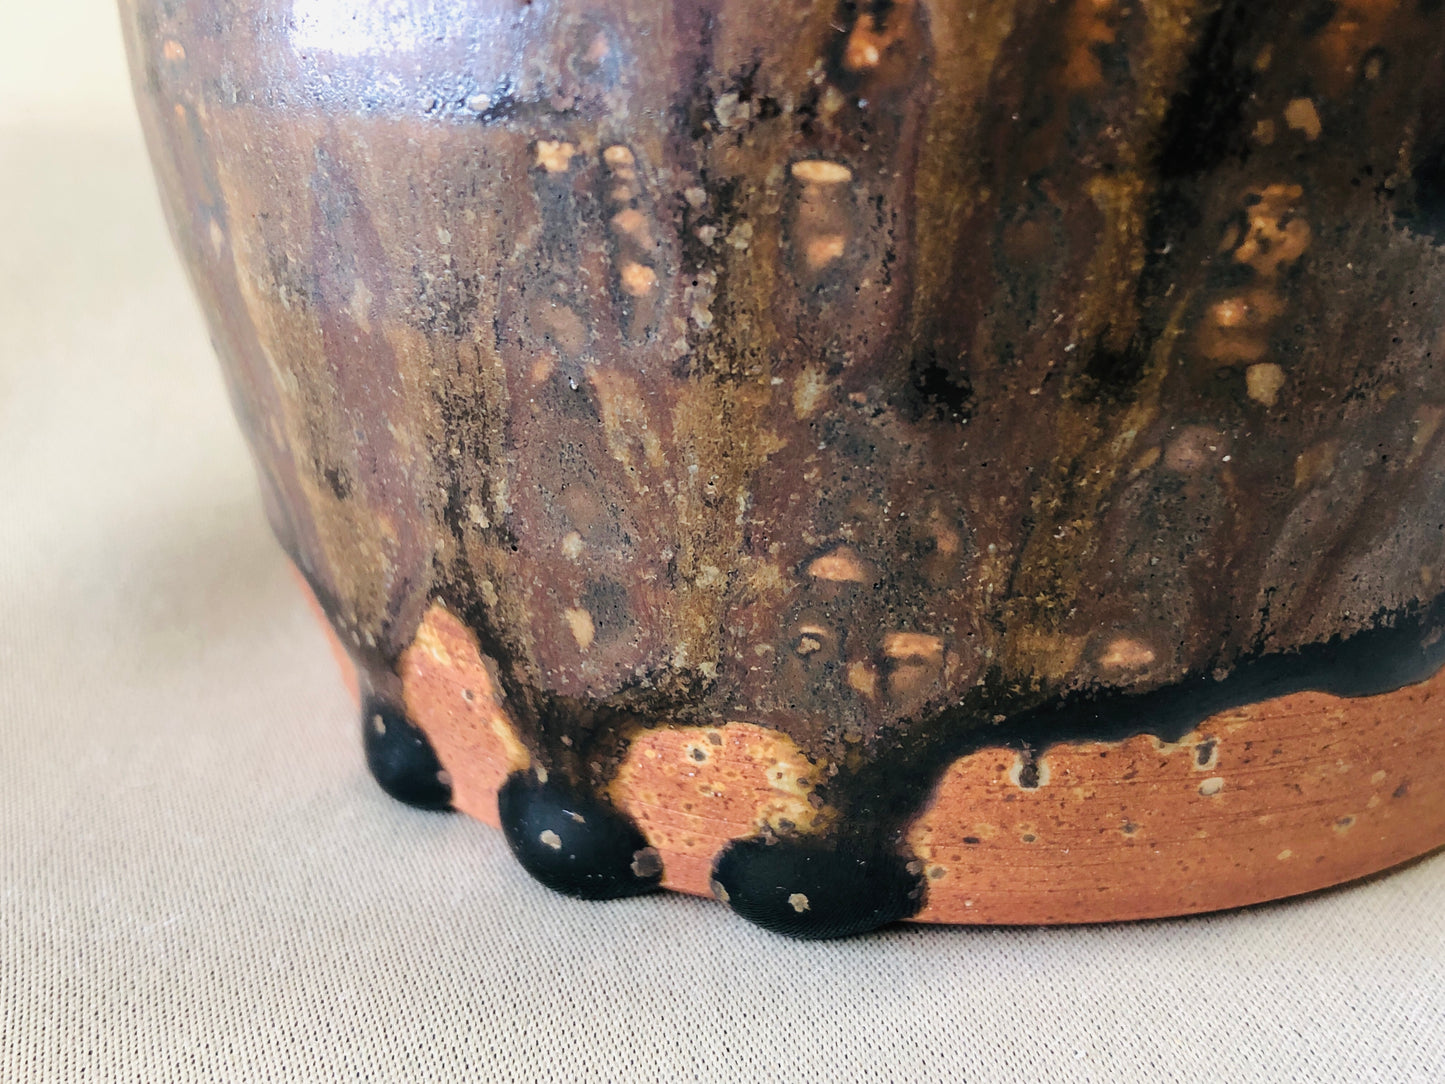 Y4354 MIZUSASHI Seto-ware water pot signed Japan Tea Ceremony antique pottery